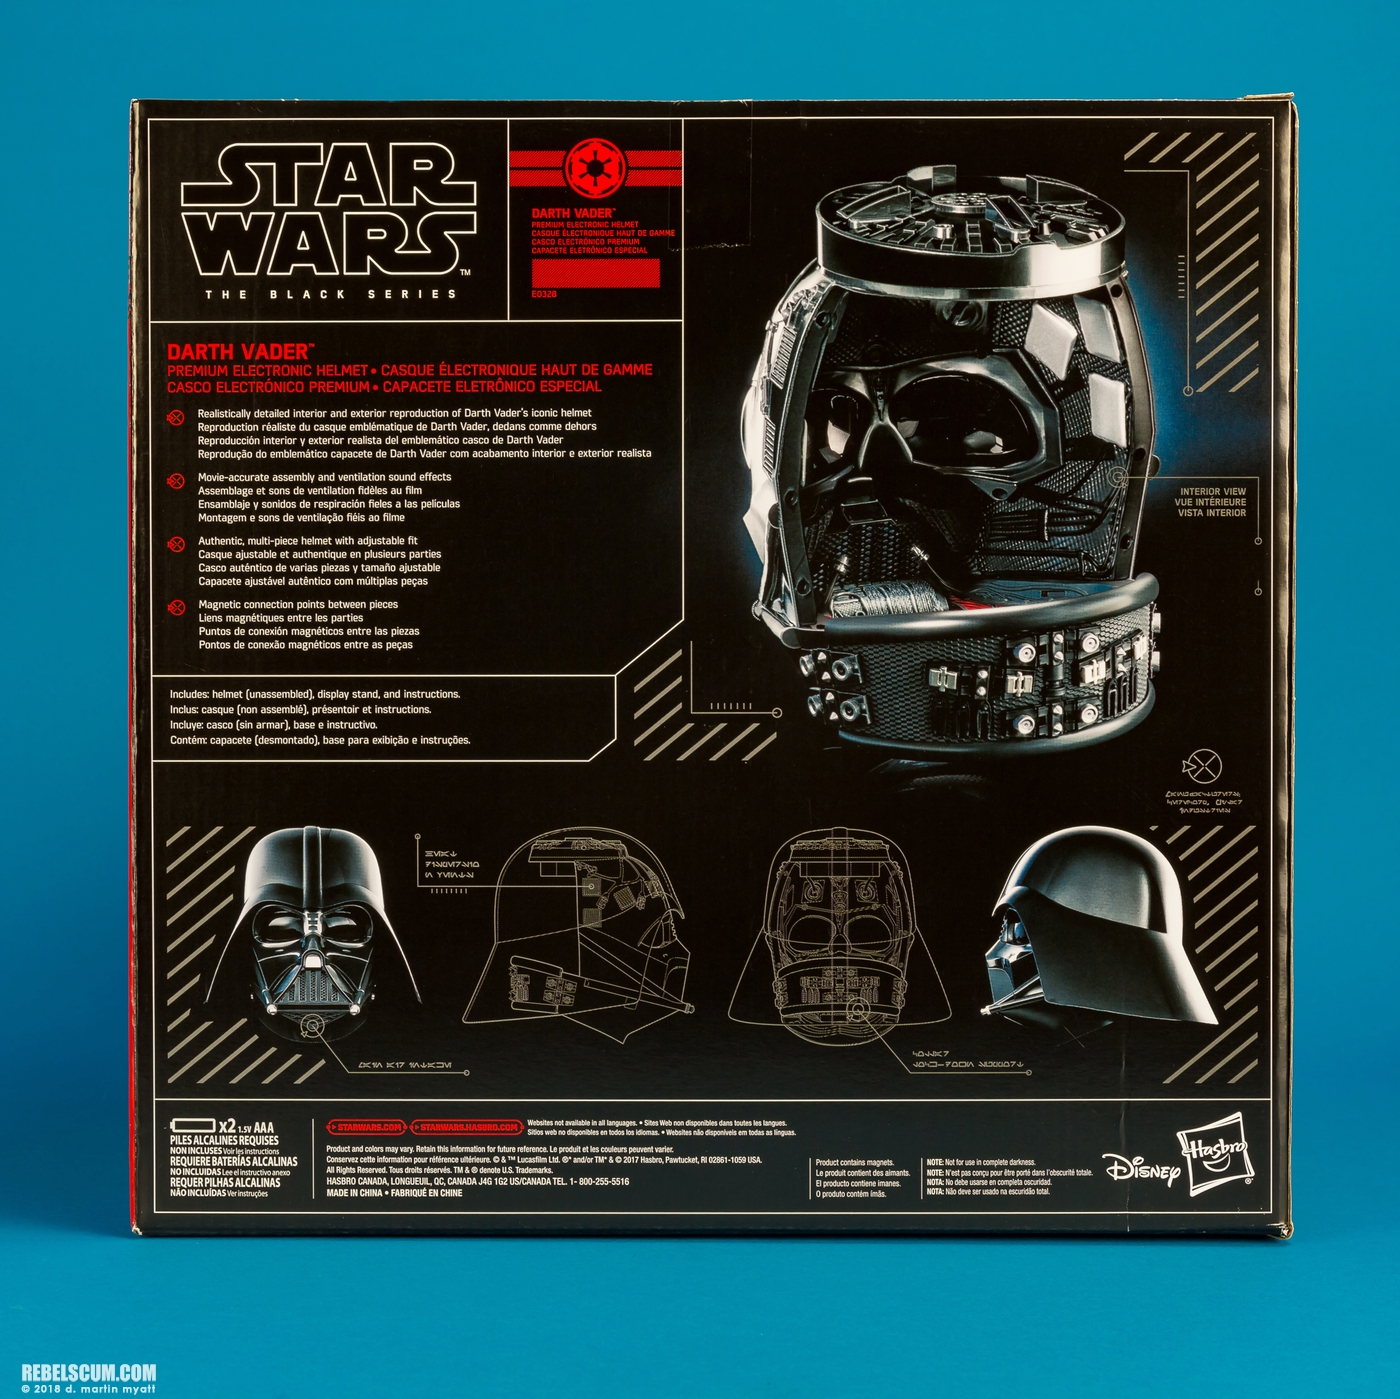 Darth-Vader-Premium-Electronic-Helmet-The-Black-Series-023.jpg